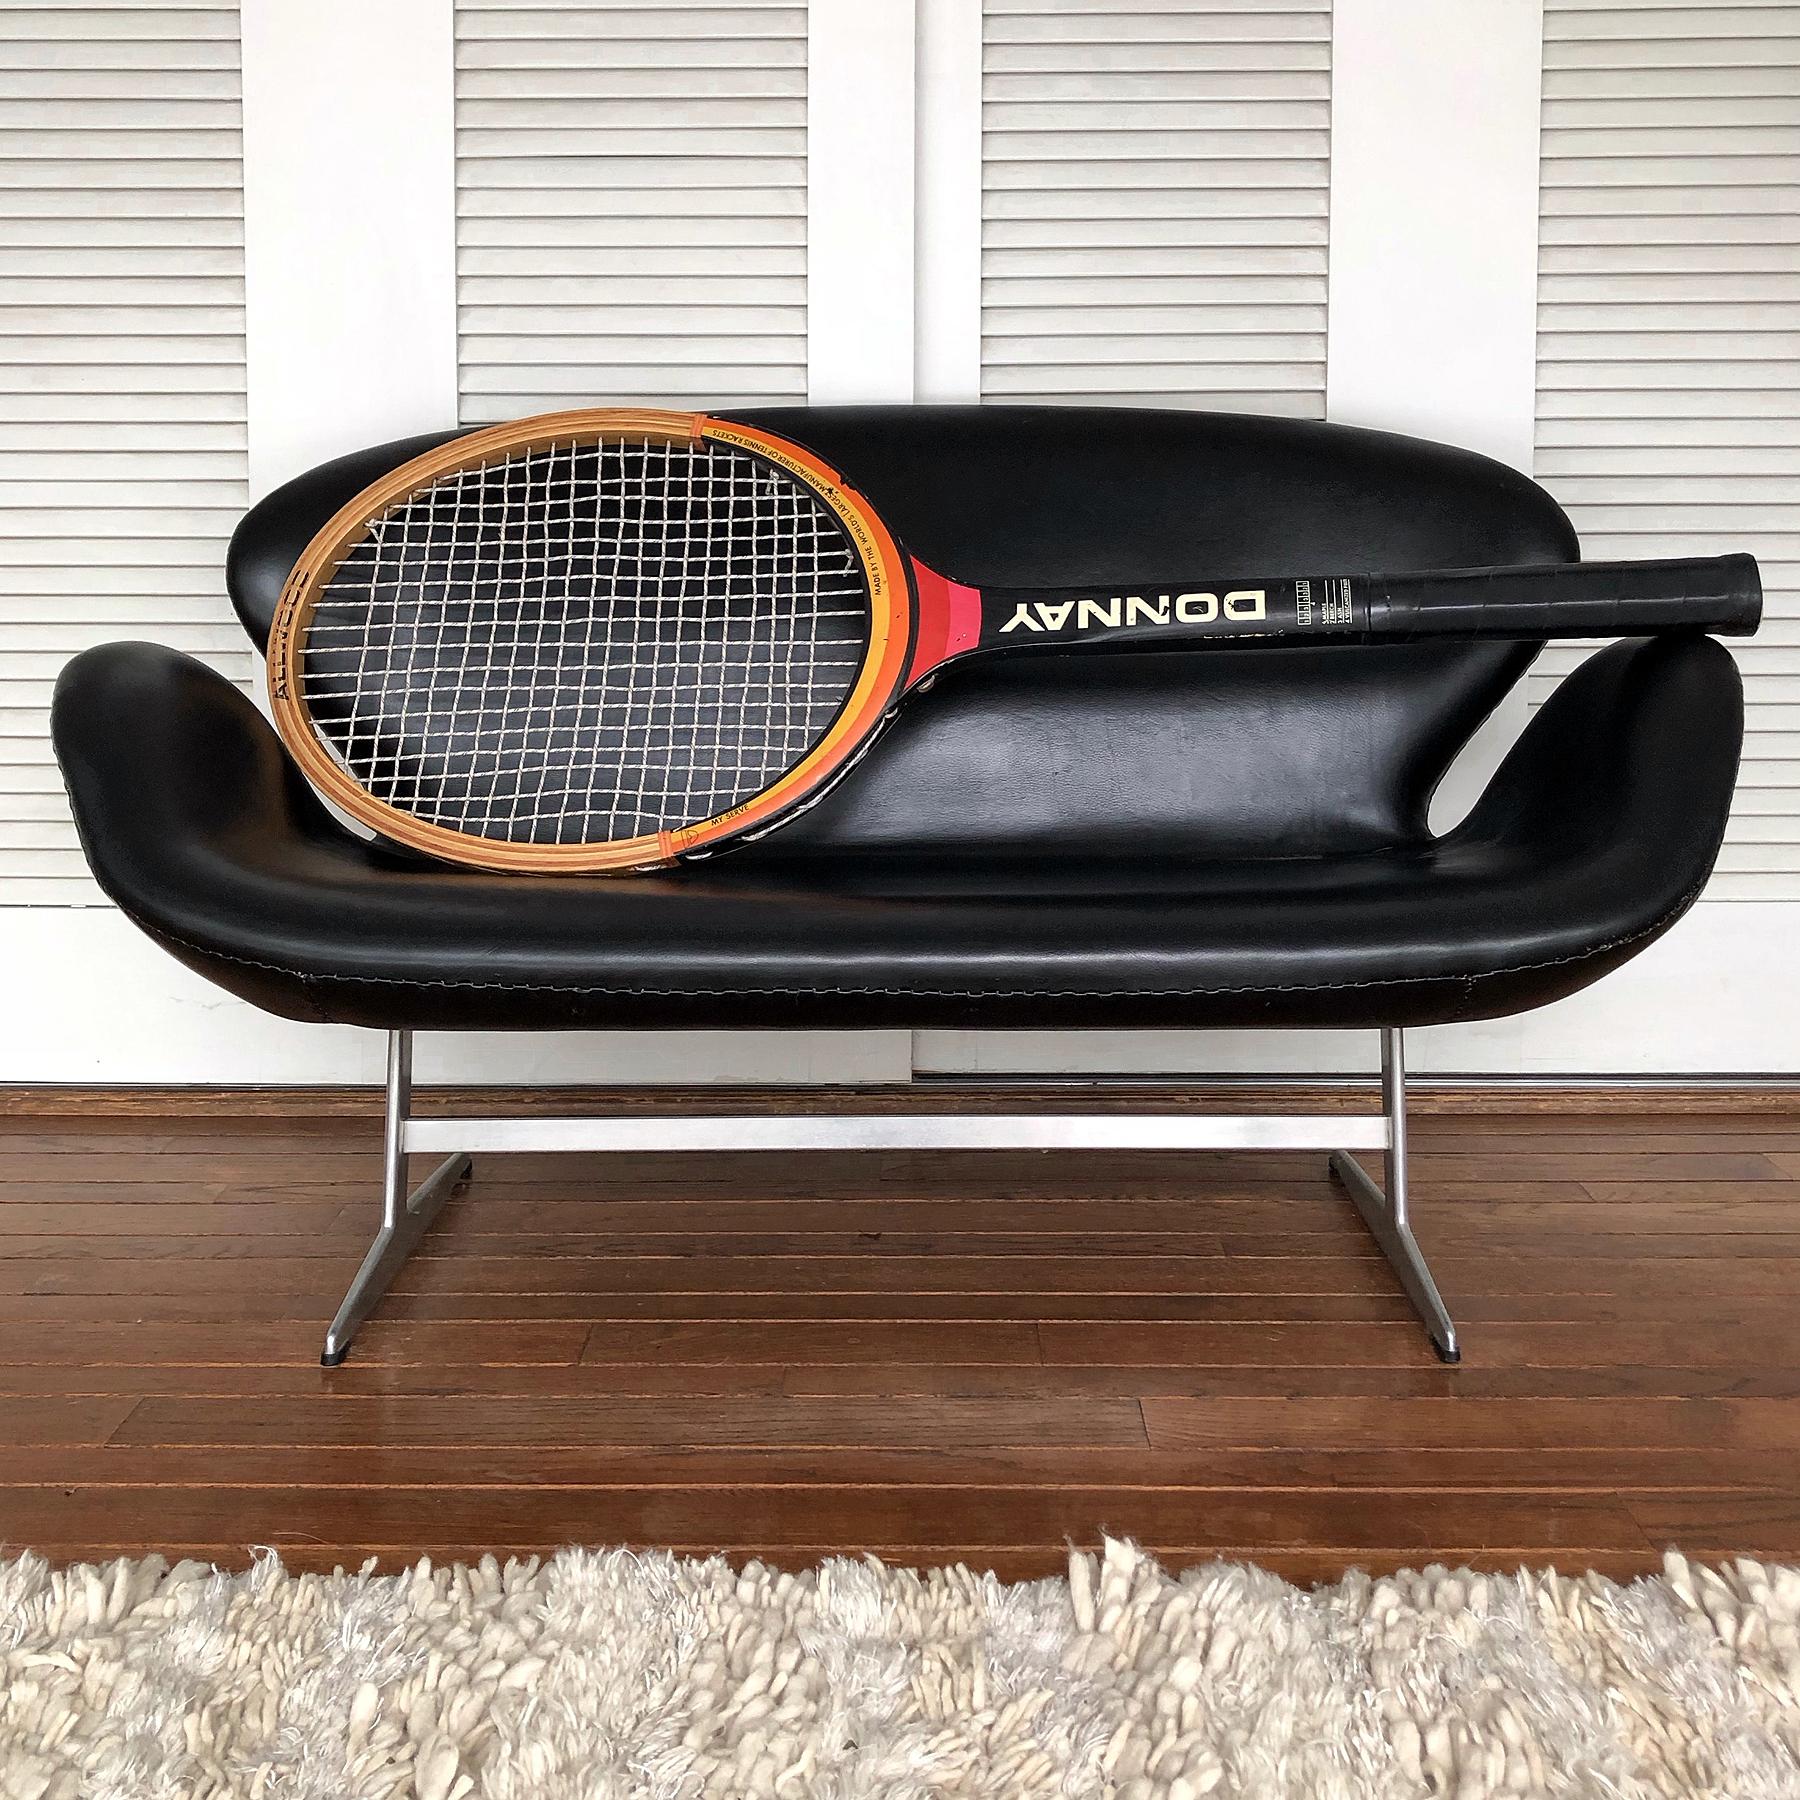 Wood Donnay Oversize Tennis Racquet Store Display